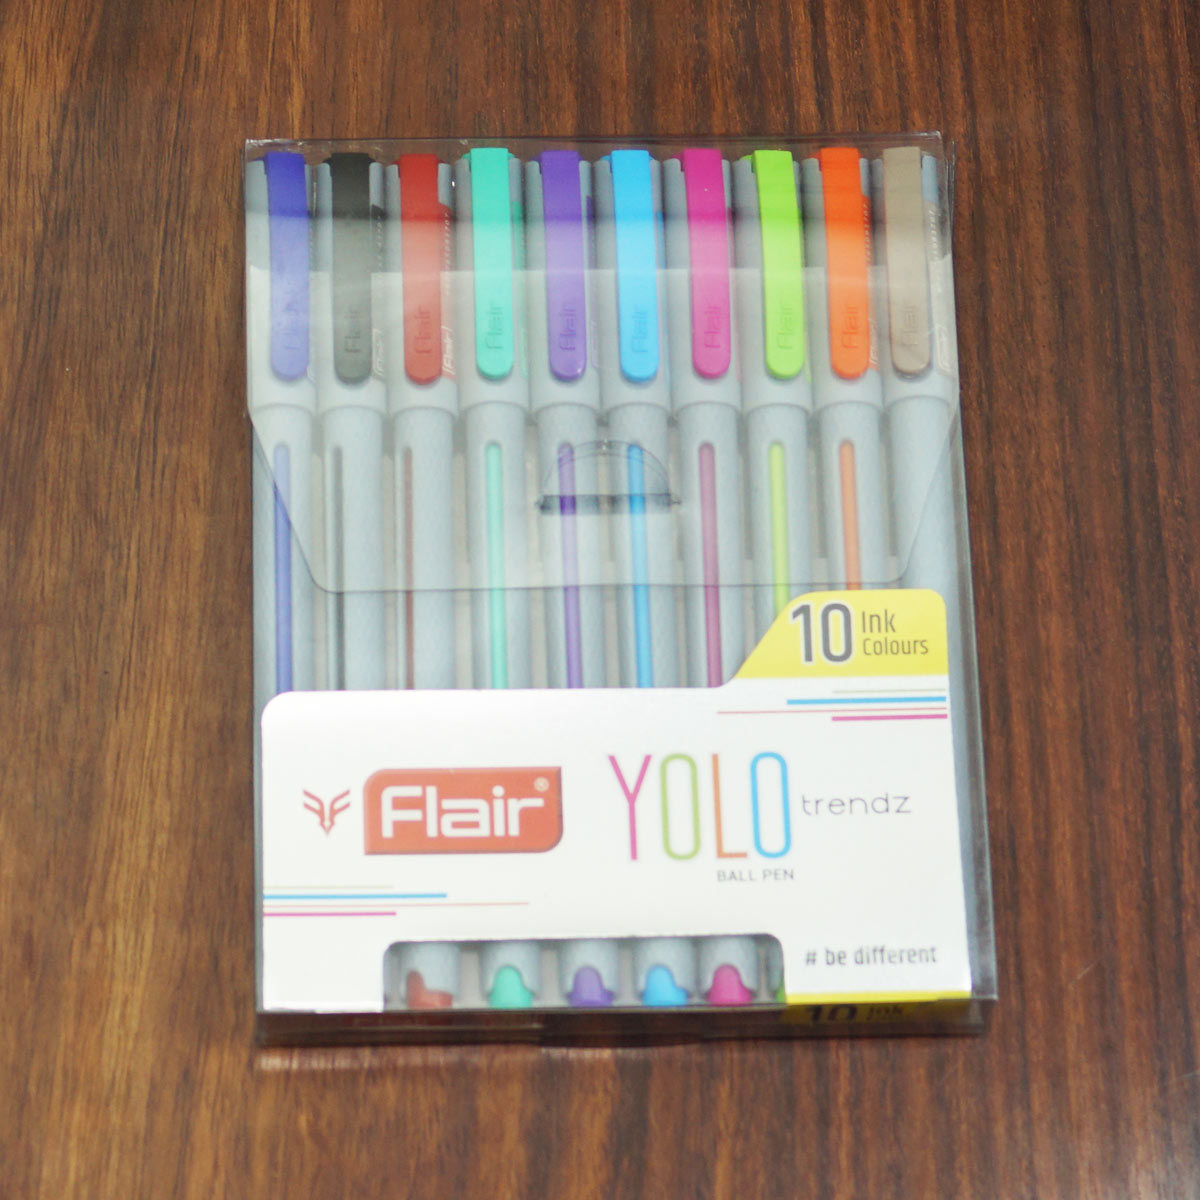 Flair Yolo Trendz Assorted Colors Pen Set SKU 23449